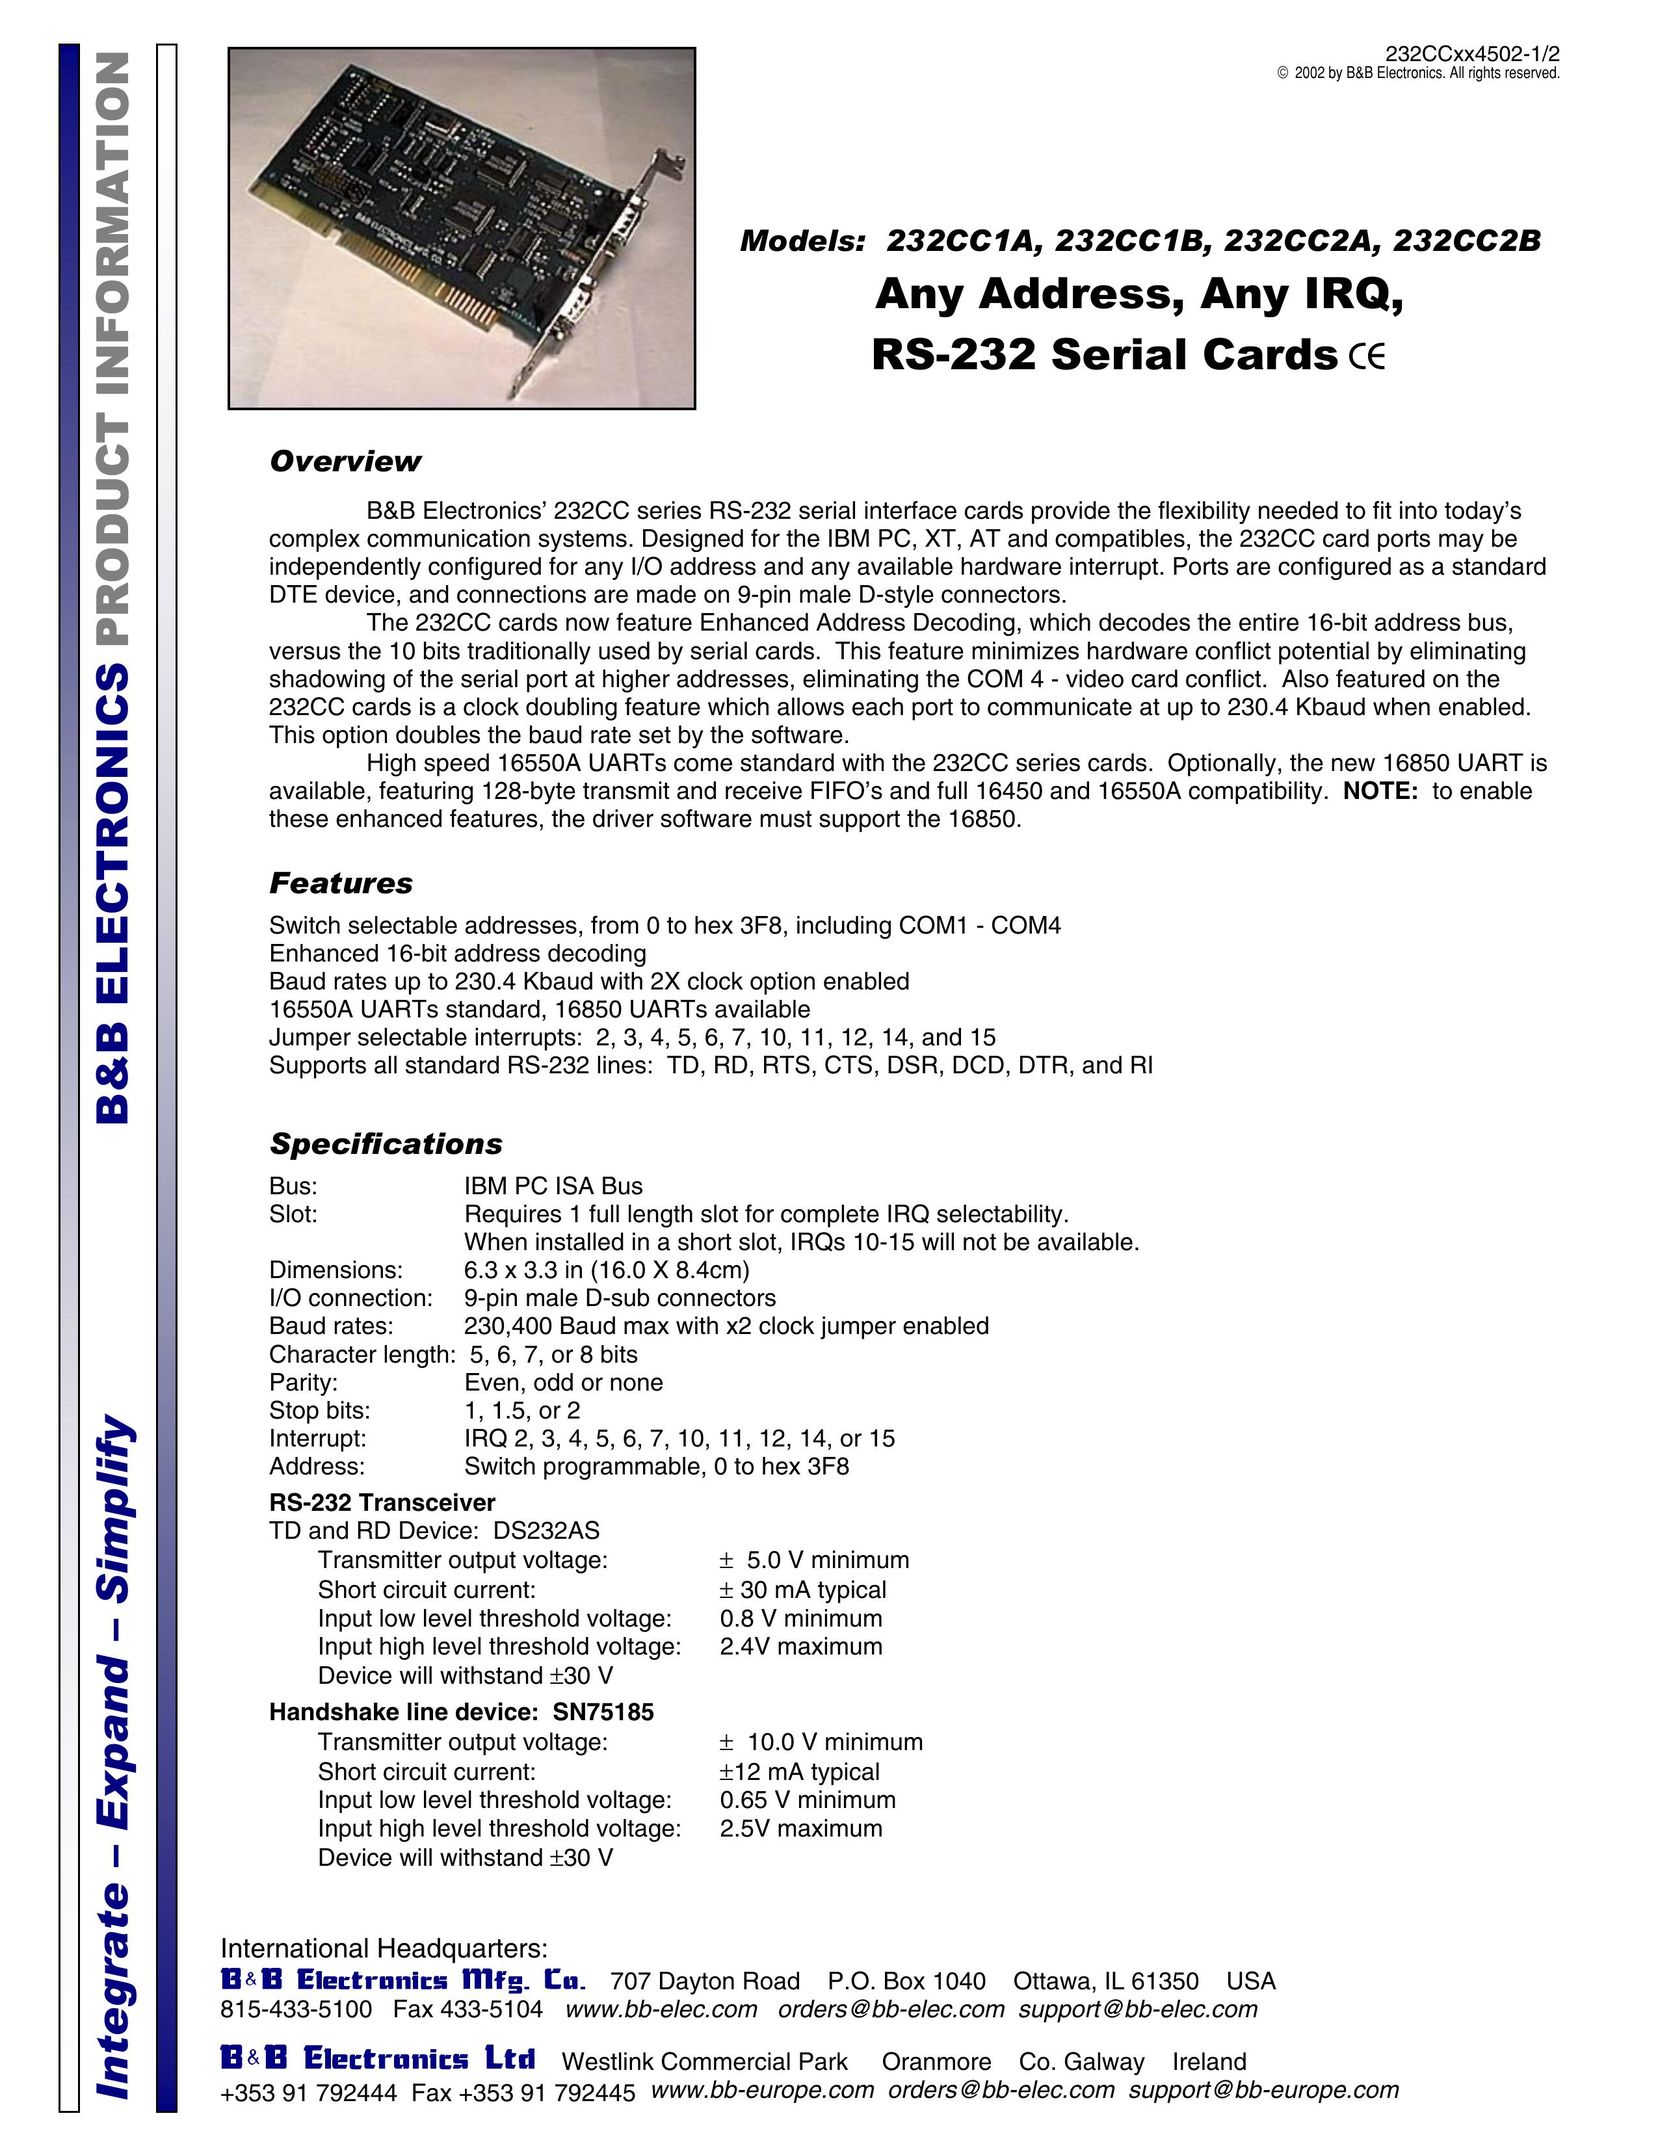 B&B Electronics 232CC1A Network Card User Manual